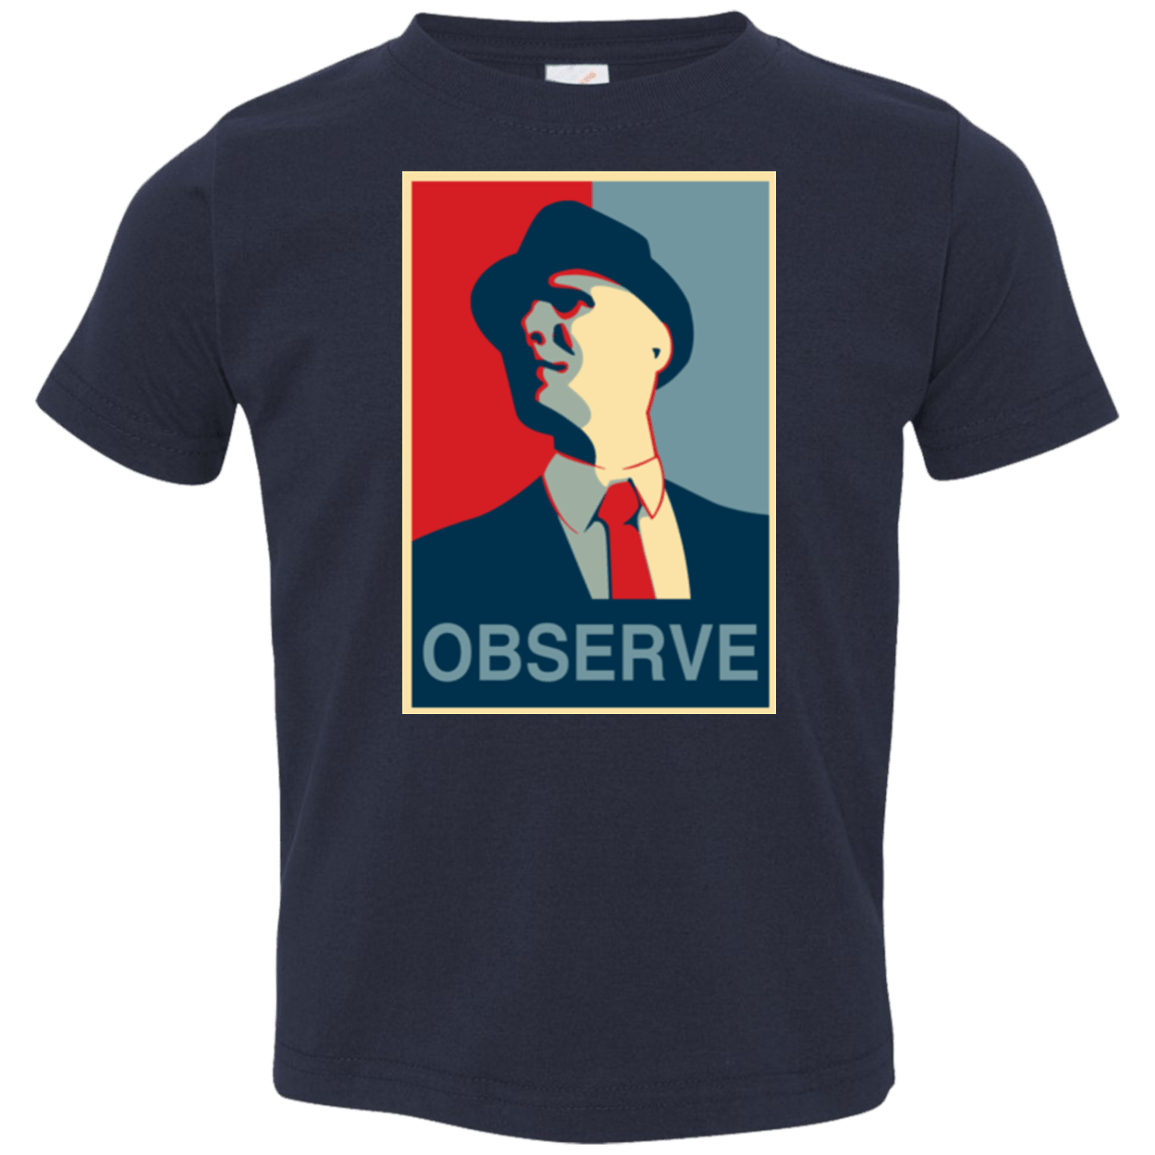 Observe Toddler Premium T-Shirt